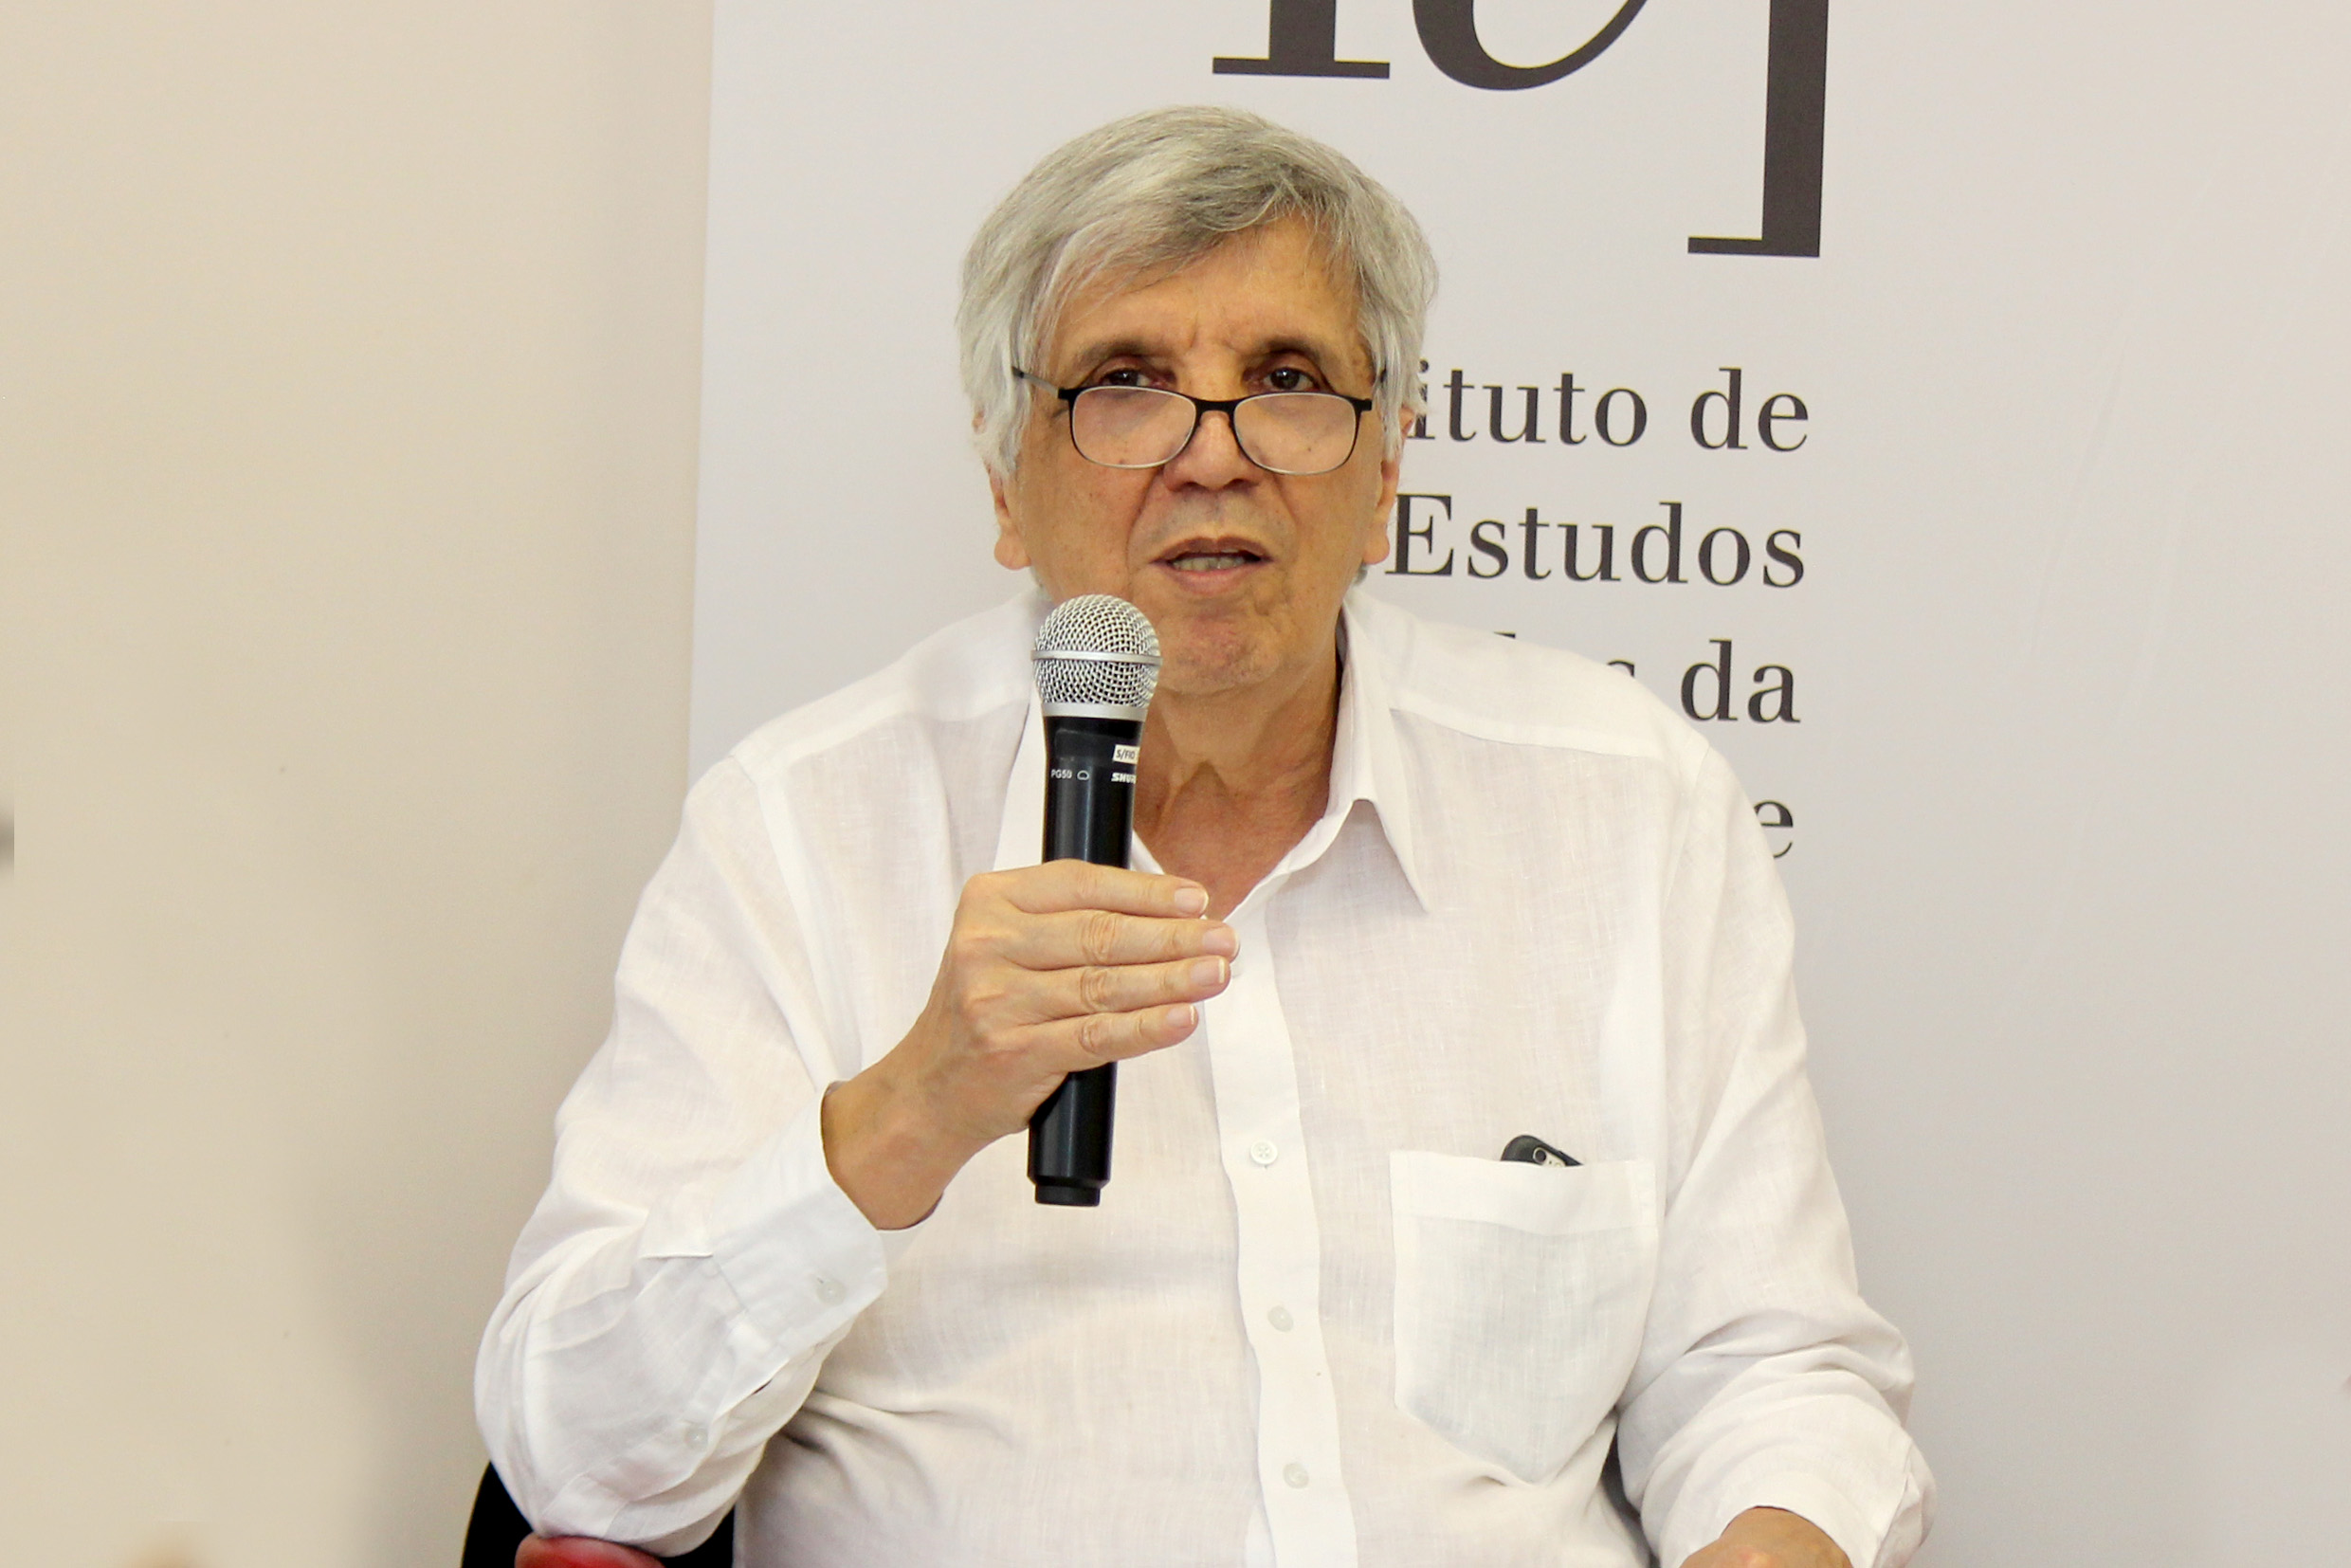 Álvaro de Vasconcelos apresenta os expositores e explica a dinâmica do debate